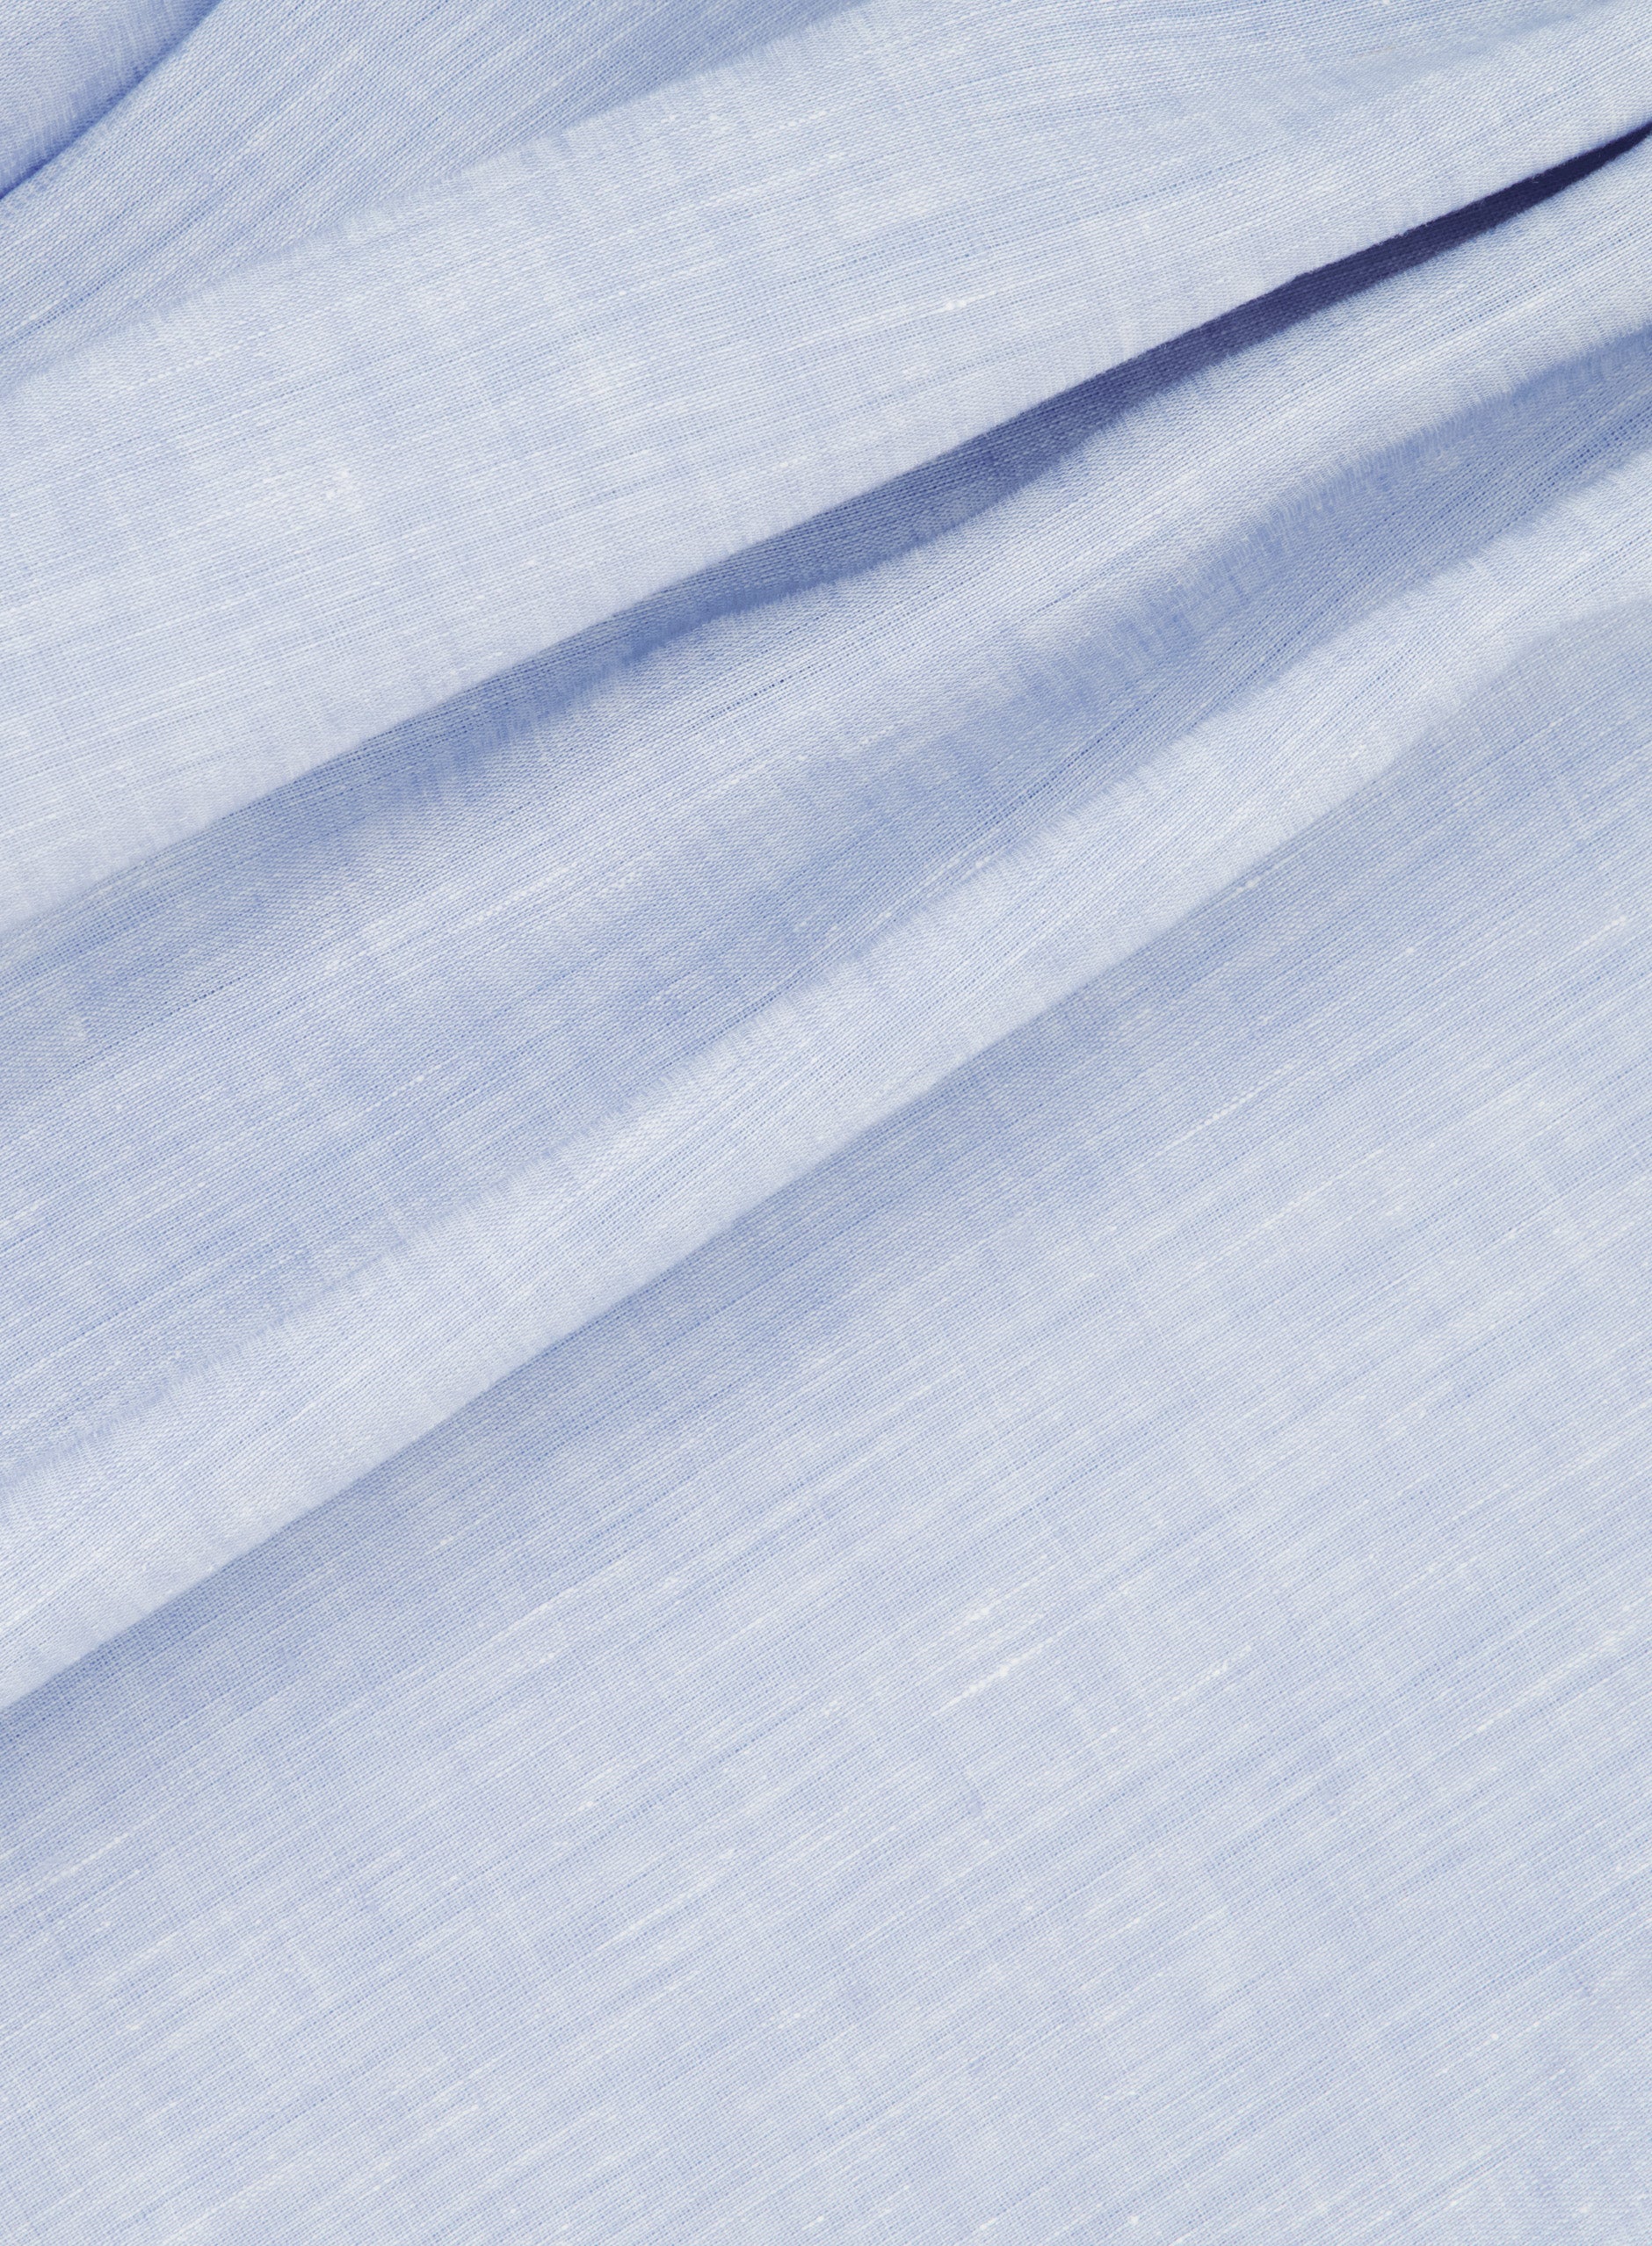 Stretch shirt van linnen | L.Blauw